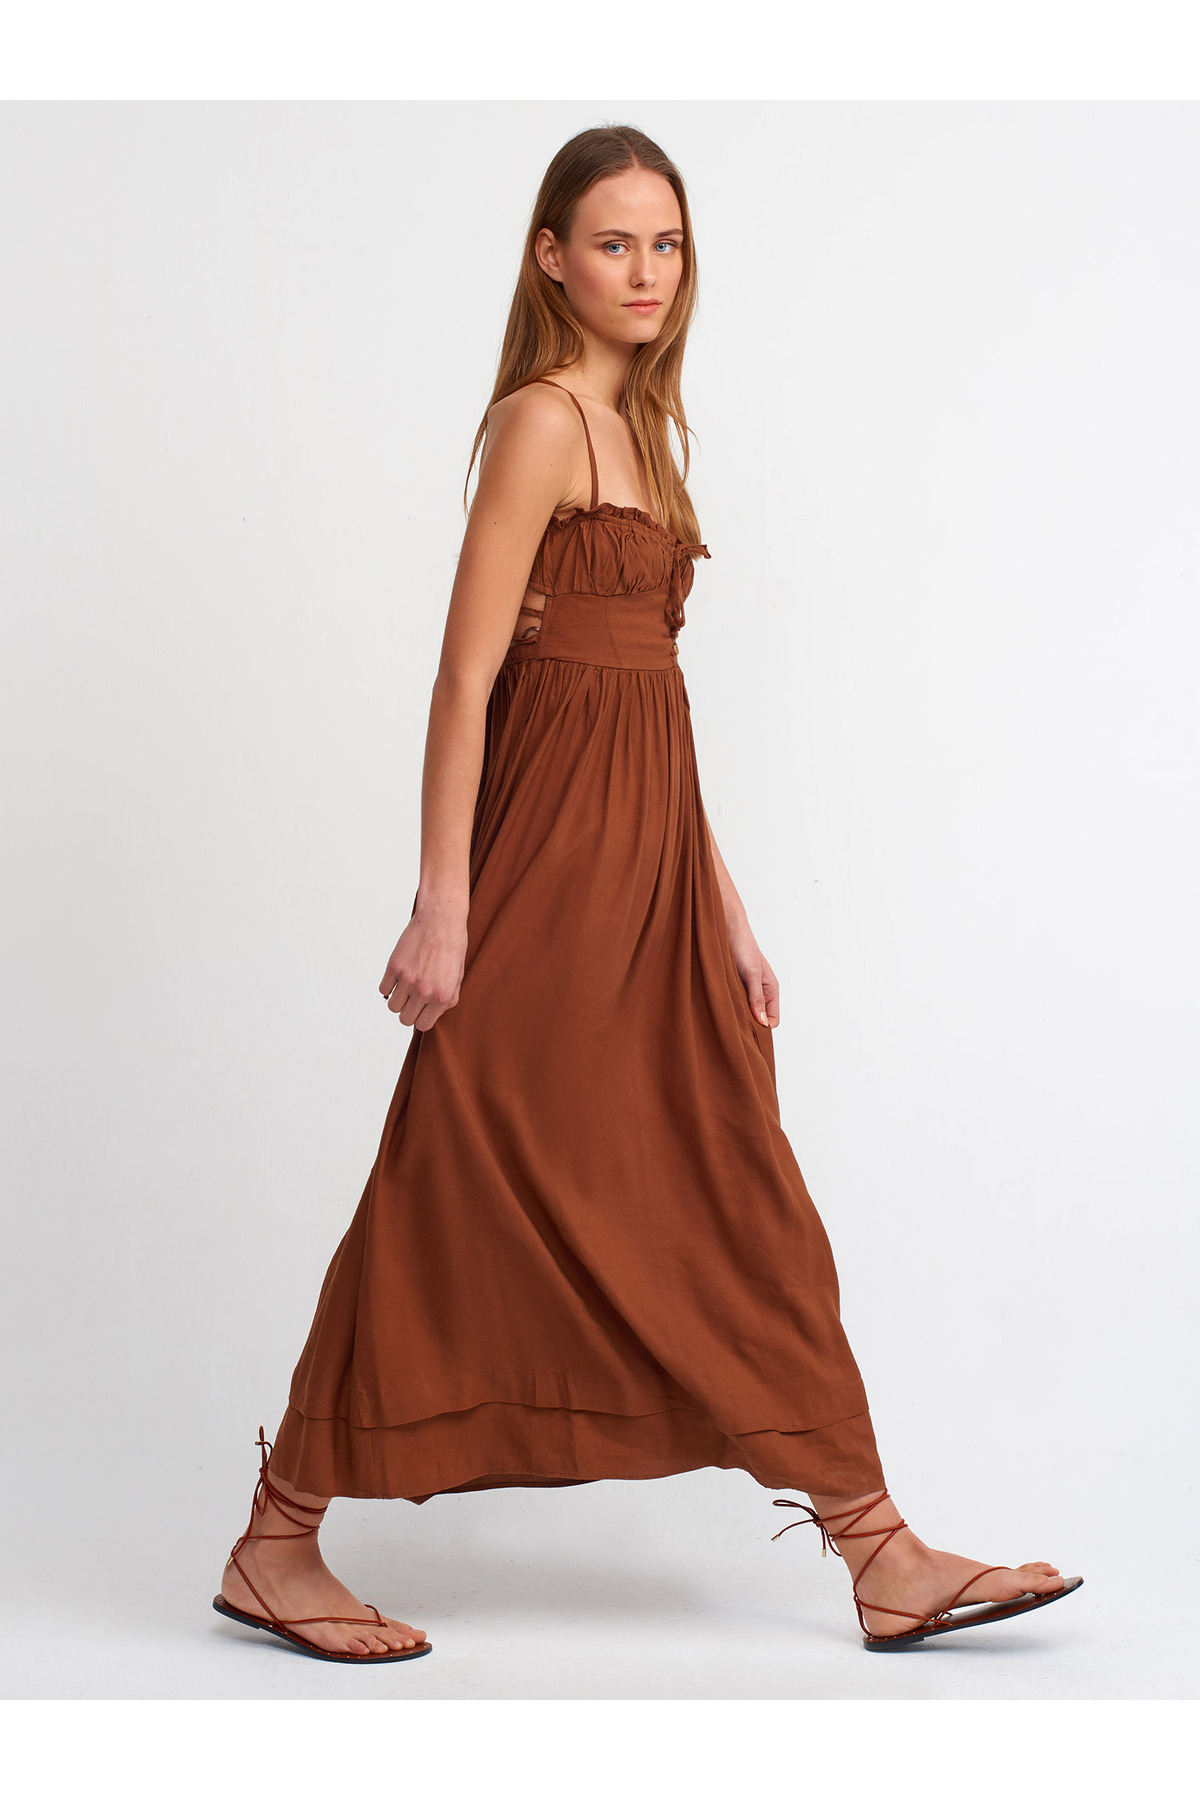 Dilvin 90390 Back Detailed Long Dress-Brown